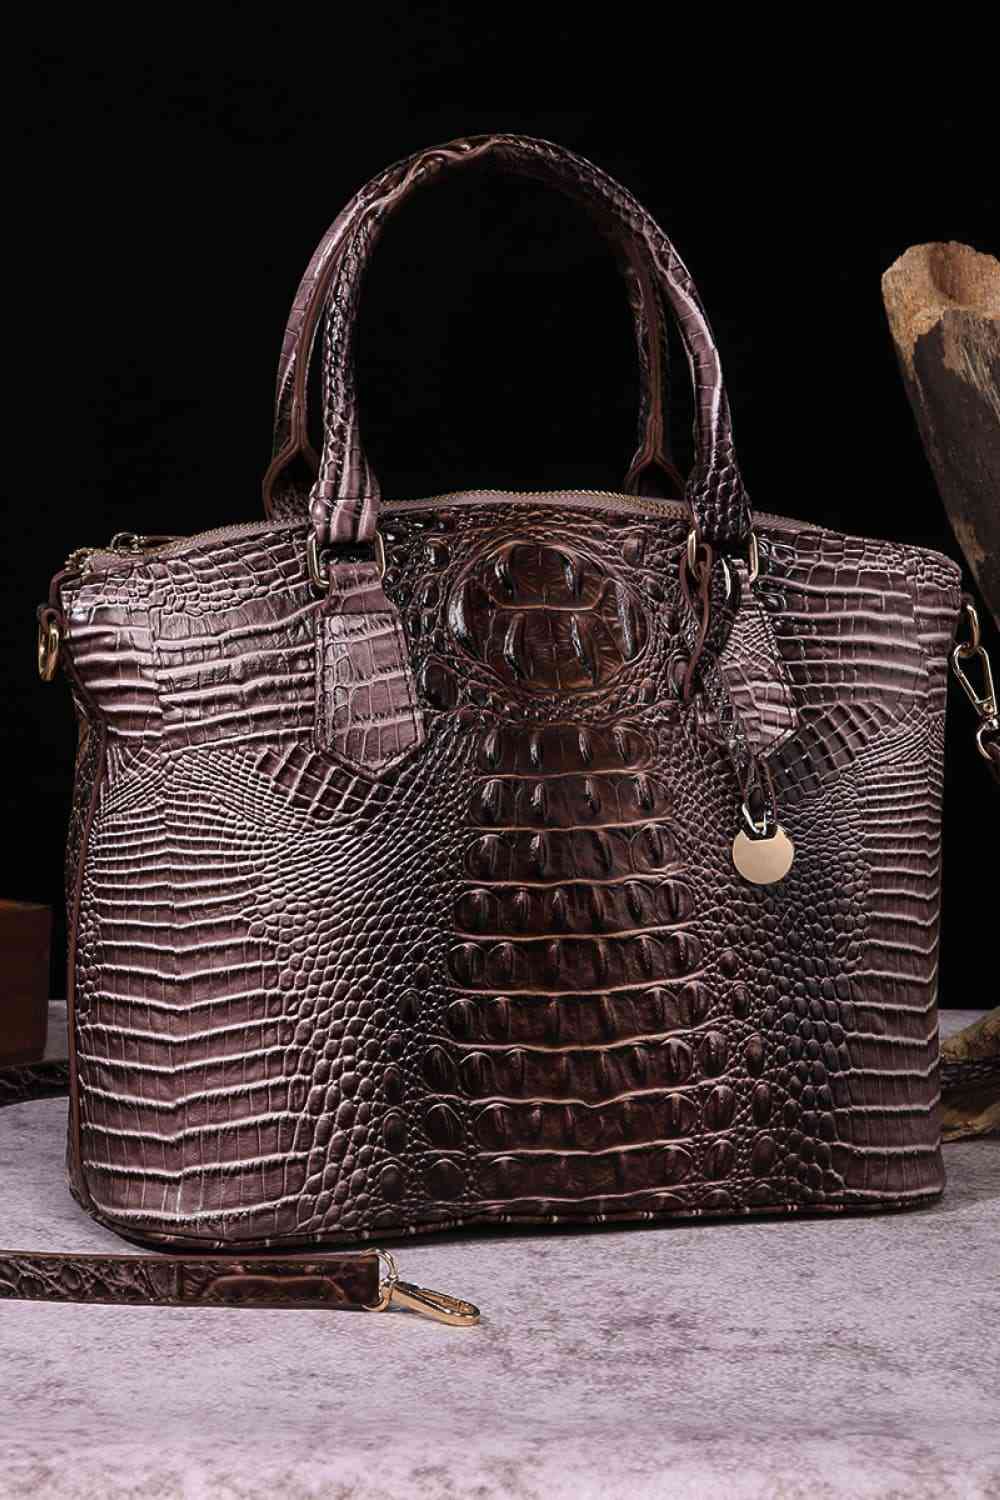 Gradient PU Leather Handbag - Just Enuff Sexy